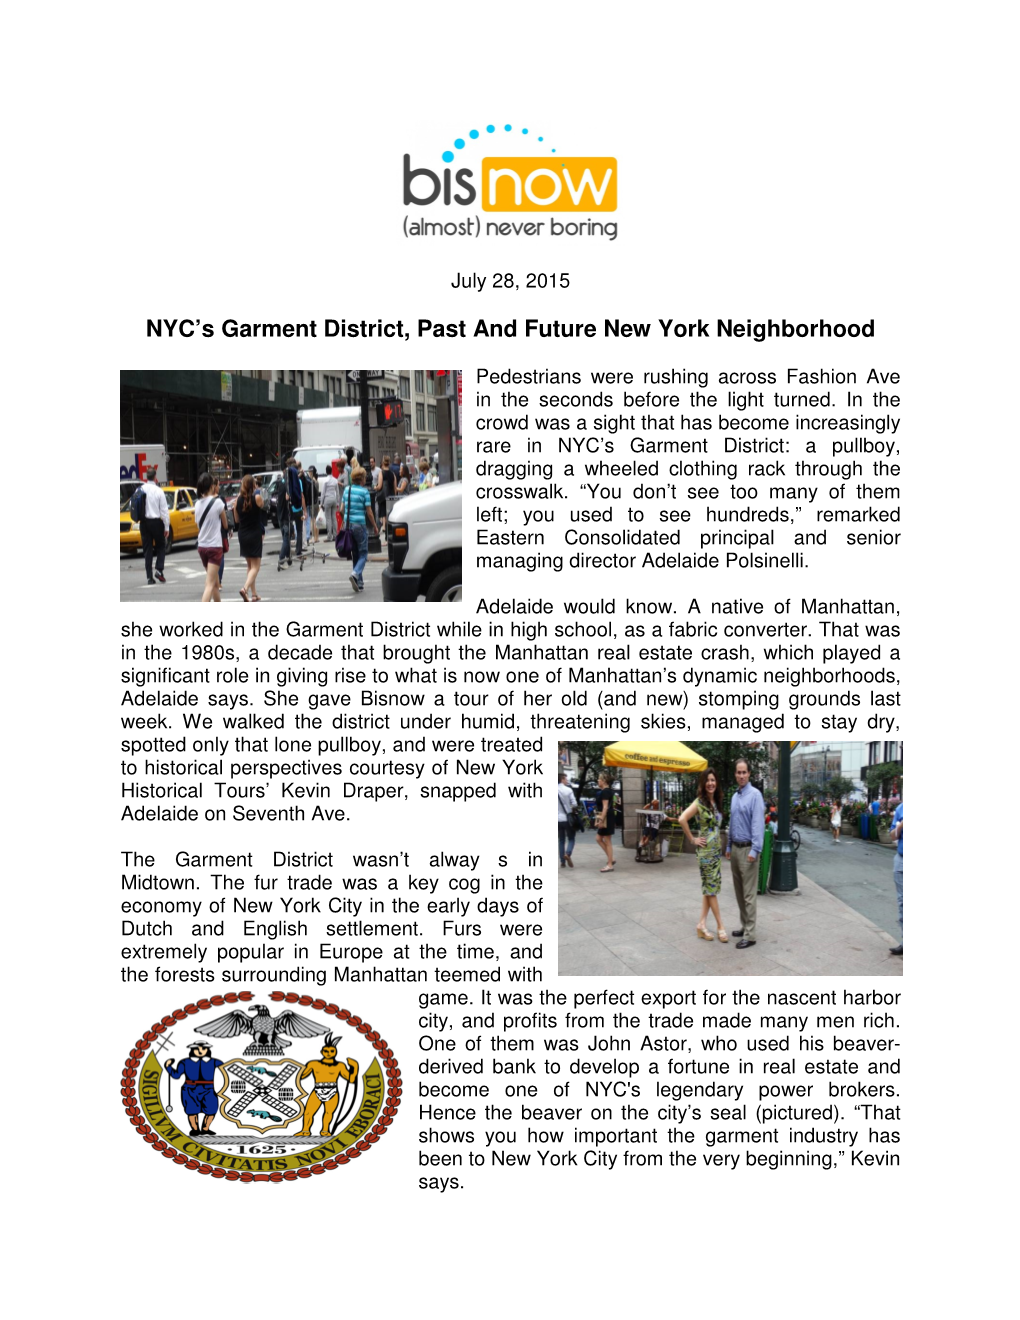 NYC's Garment District, Past and Future New York Neighborhood